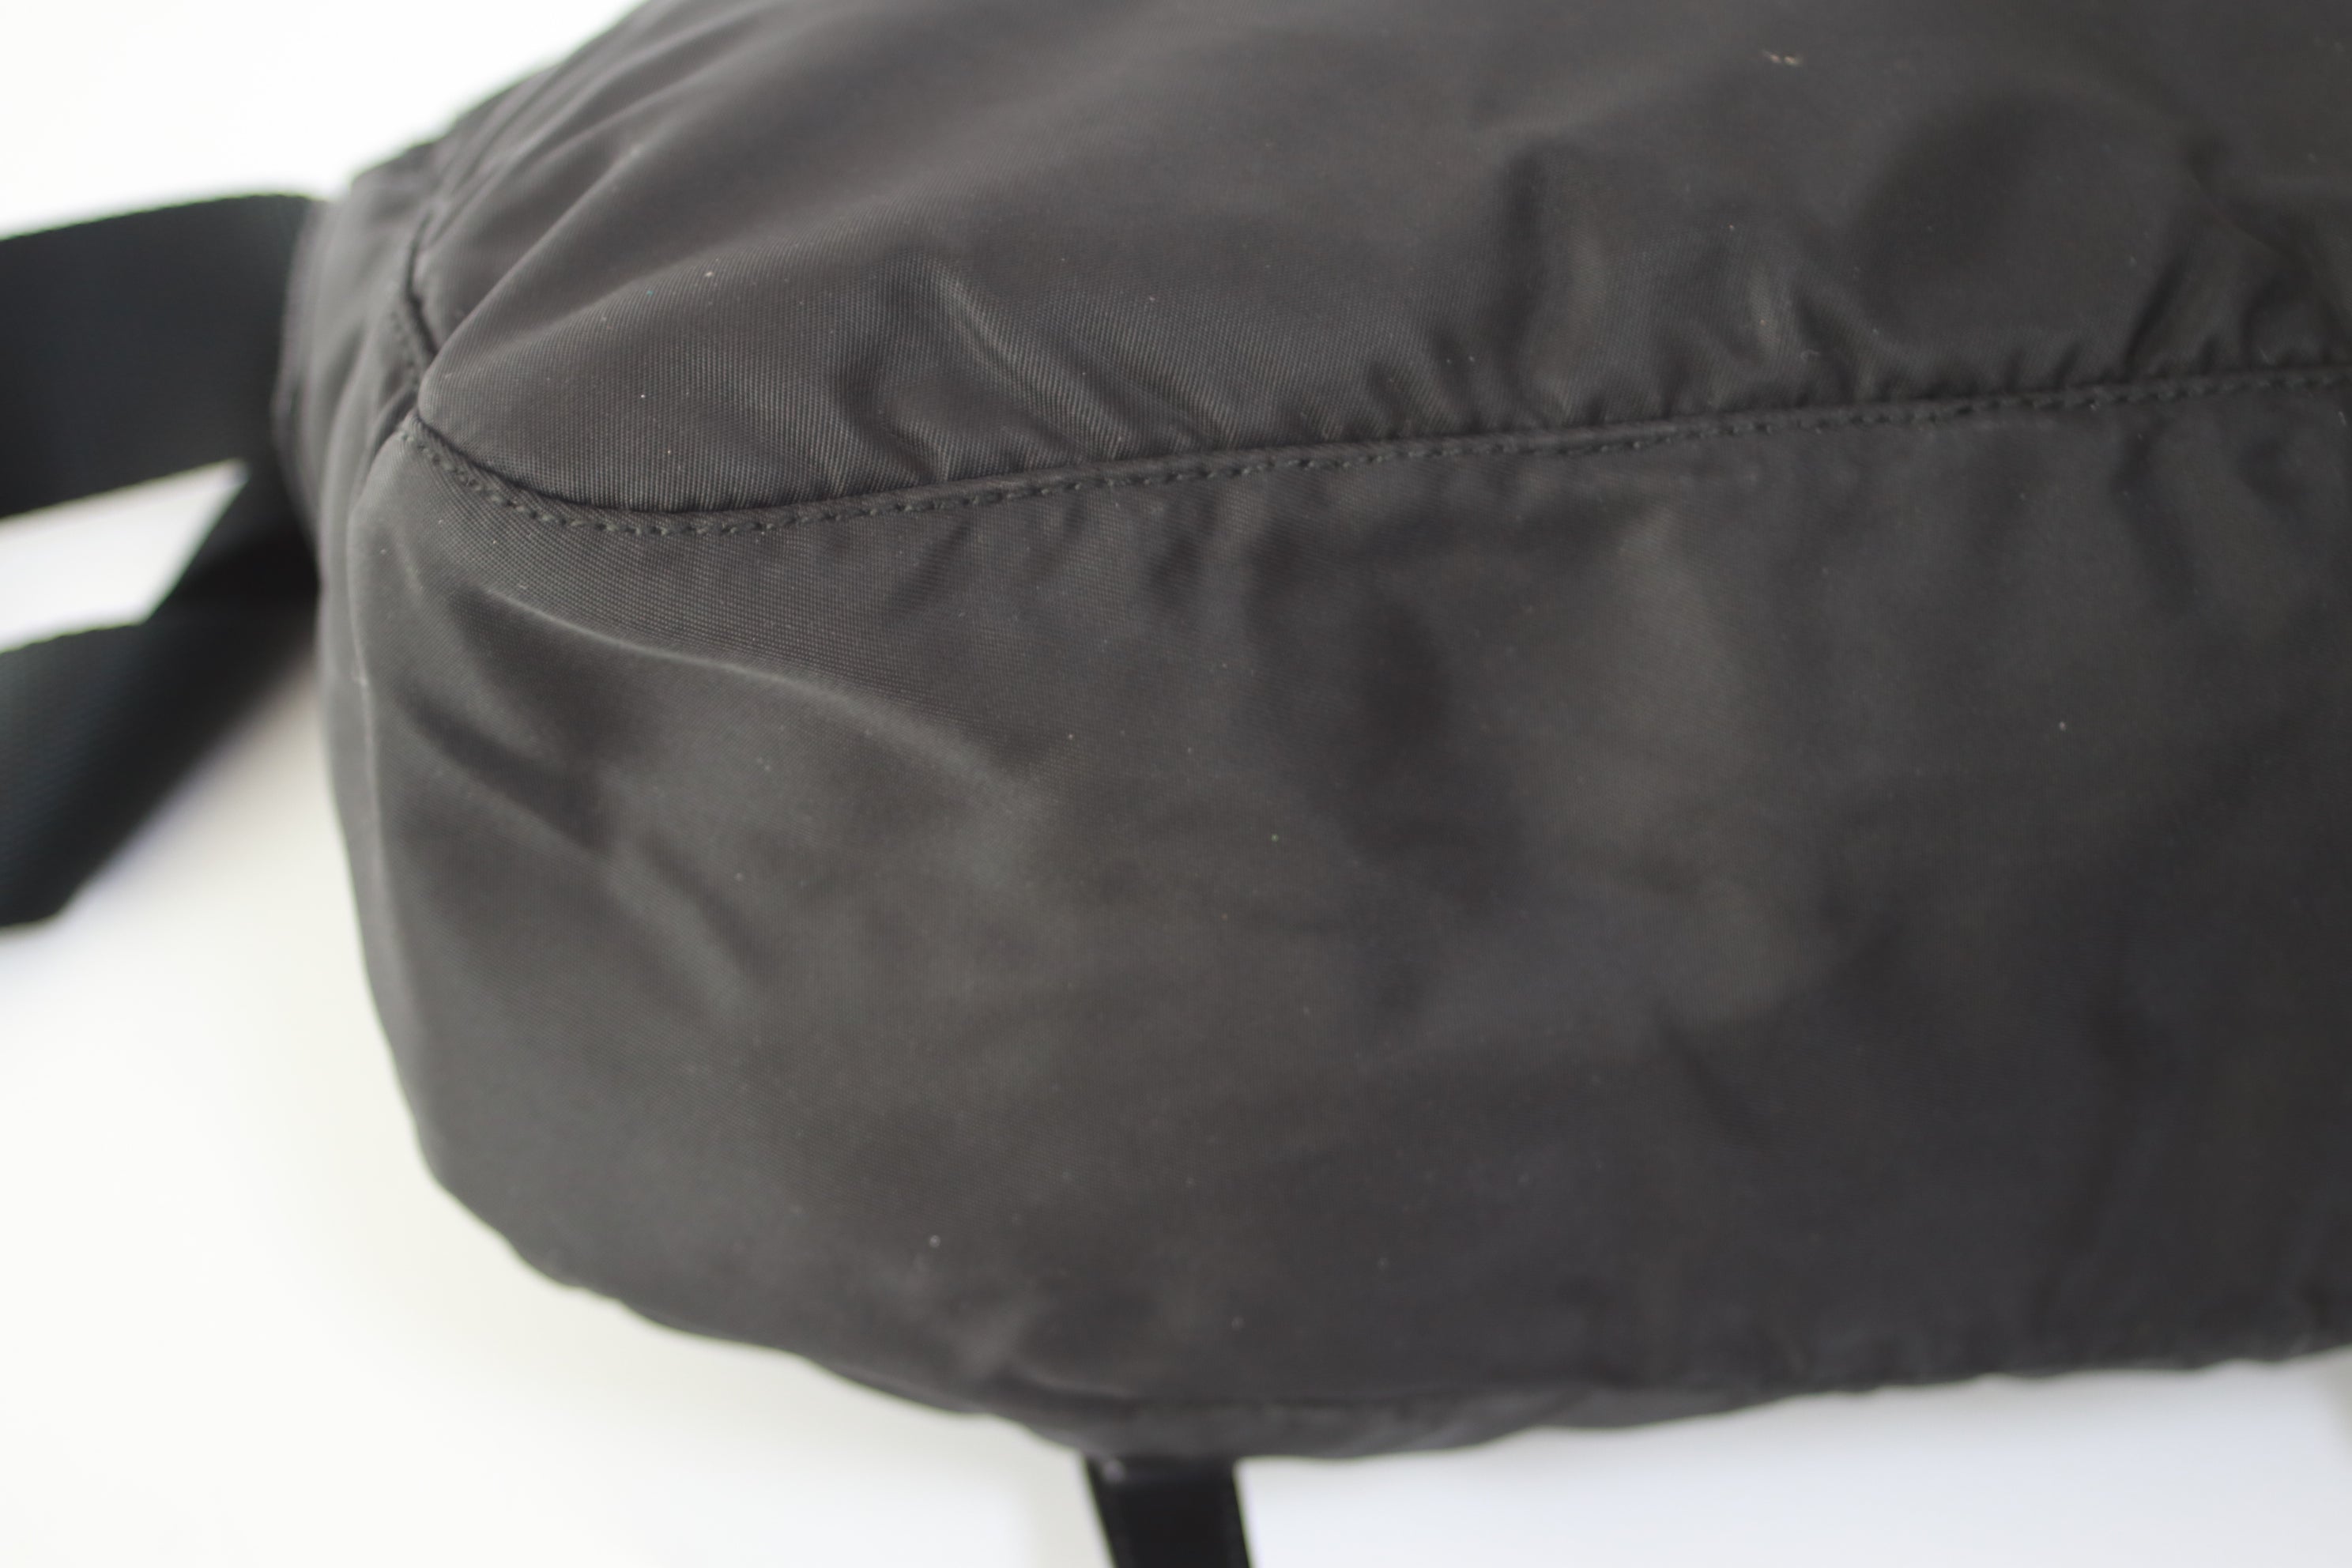 Prada Nylon Shoulder Bag Used (7193)